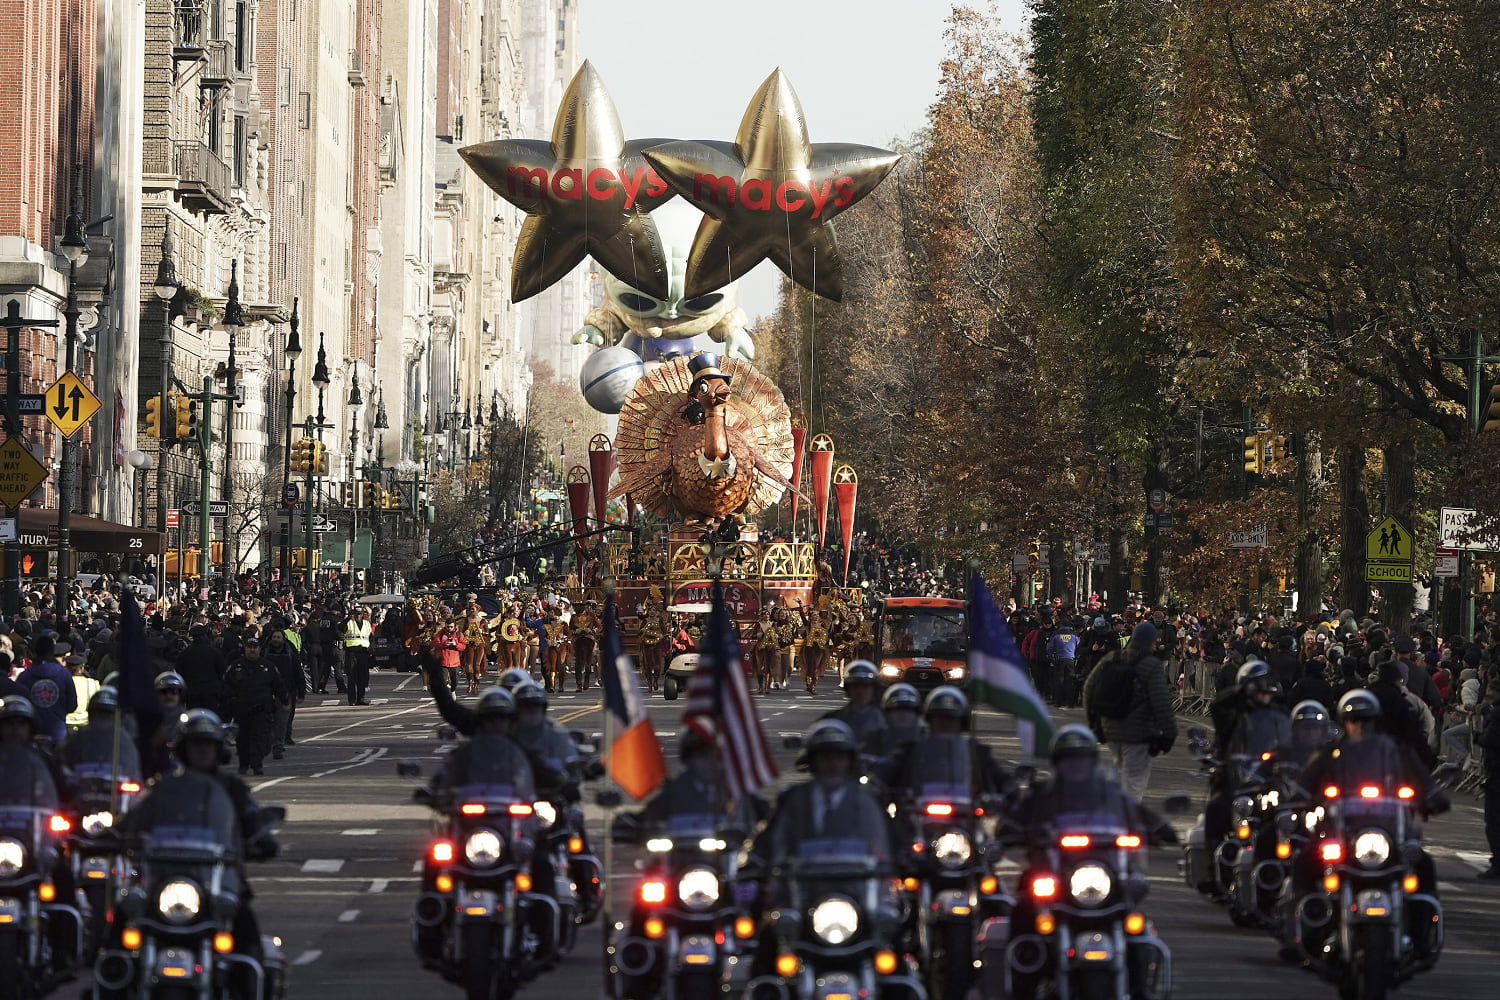 Al Roker returns to co-host Macy’s Thanksgiving Day Parade